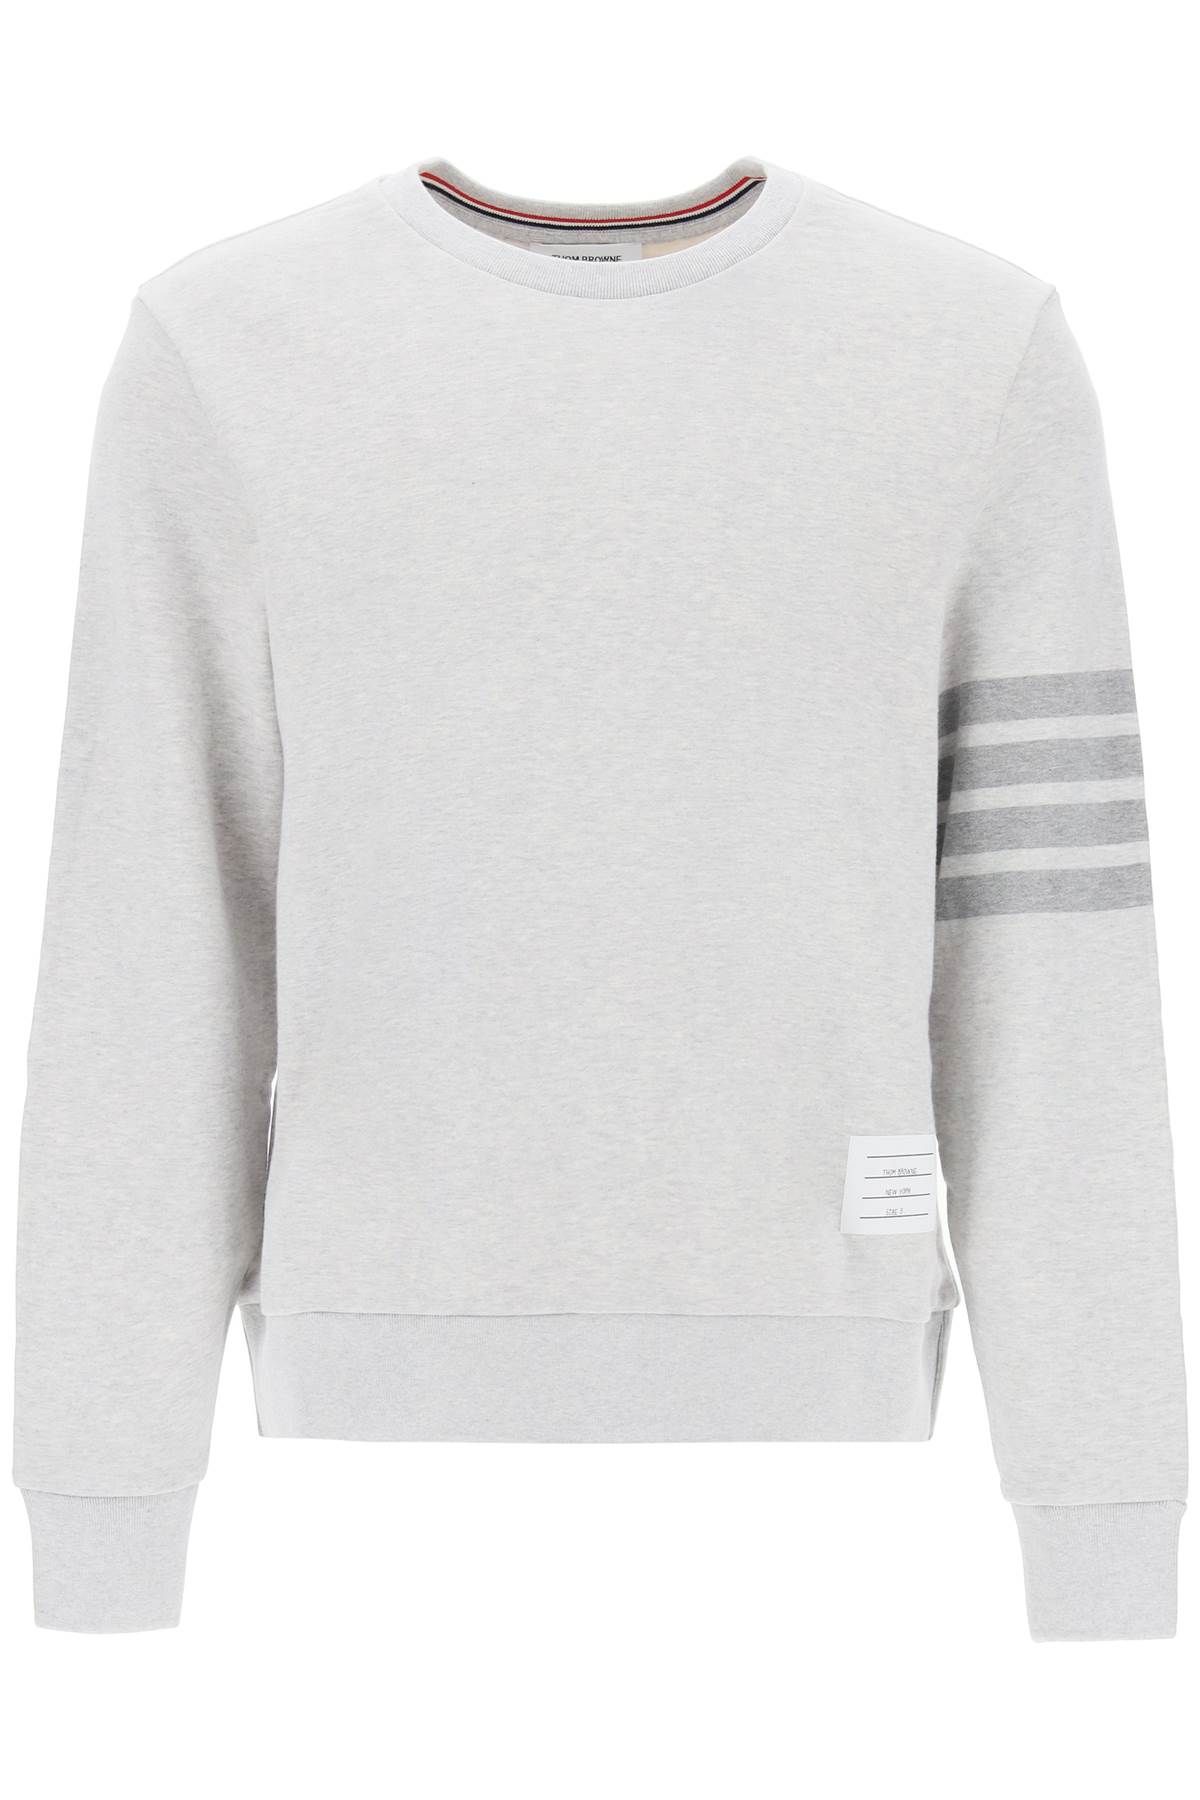 Thom Browne THOM BROWNE cotton 4-bar sweatshirt